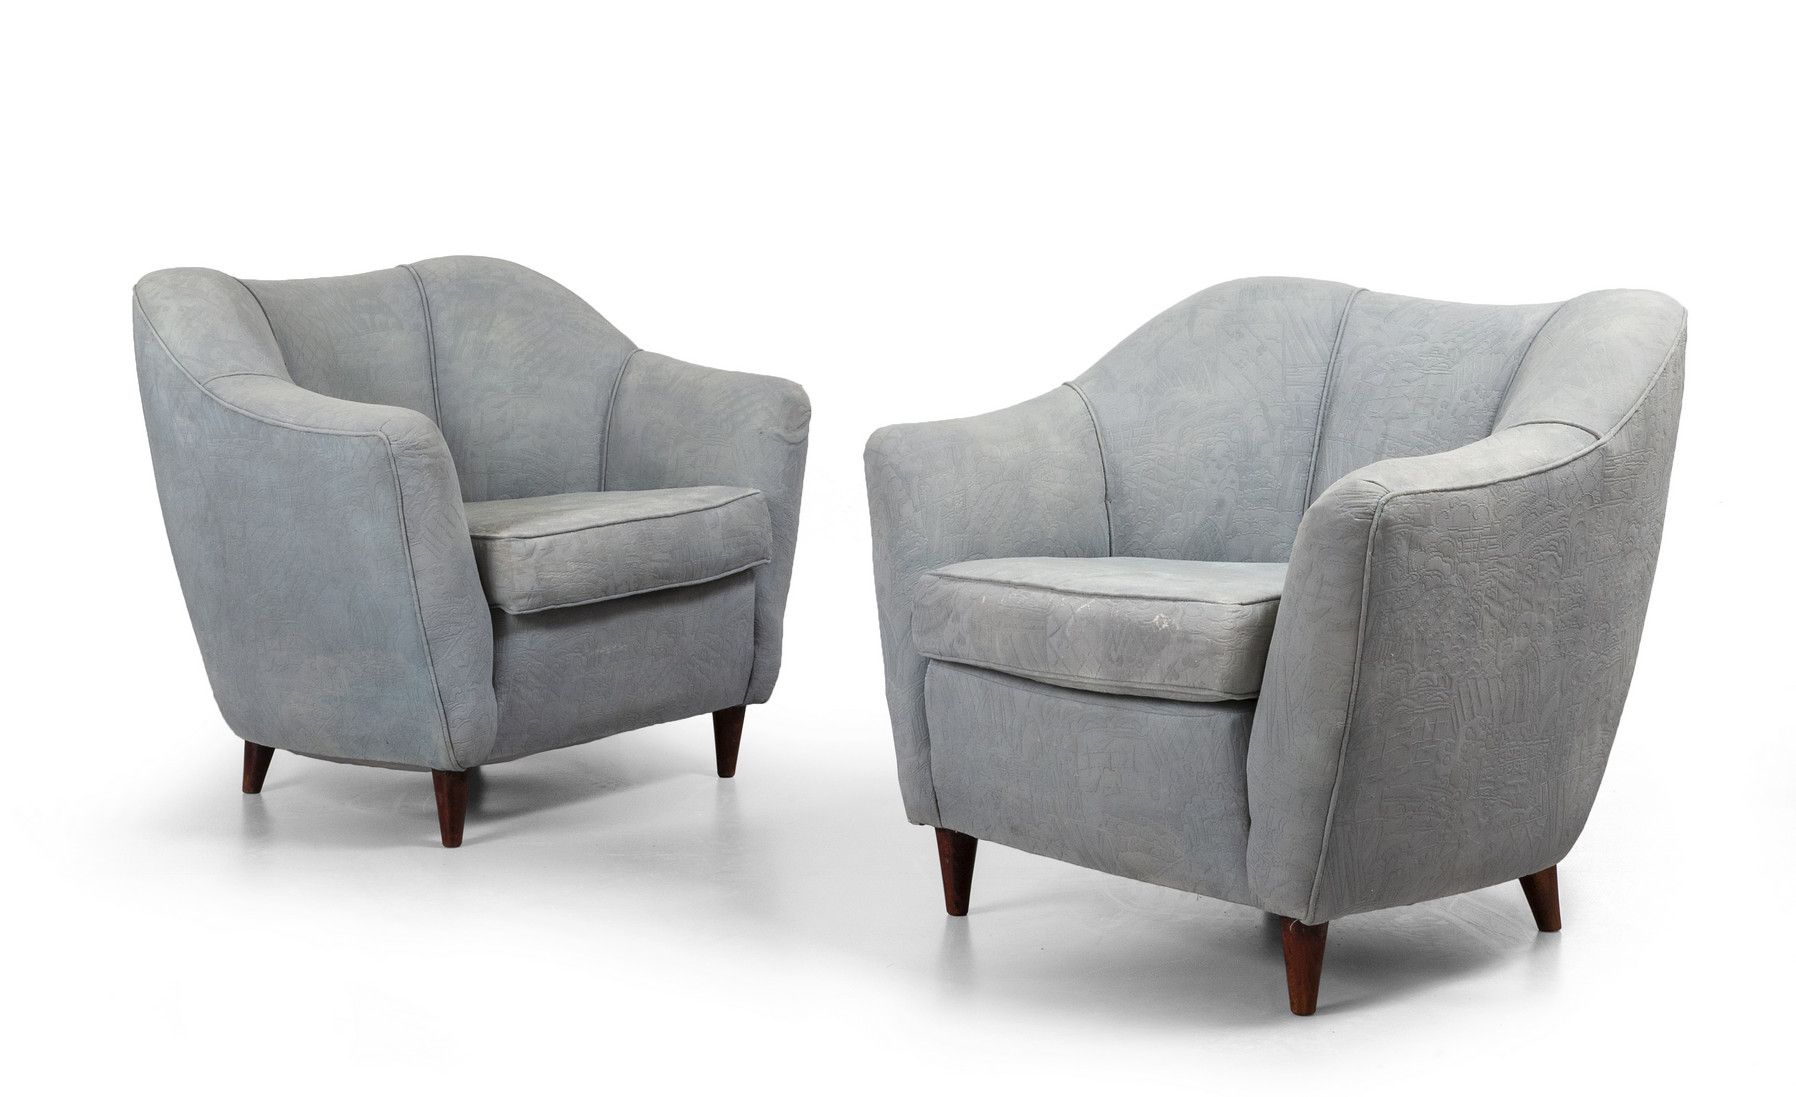 Poltrone 两把1950年代的扶手椅。
木制框架和腿，软垫部分
，用织物覆盖。
高度74厘米，宽度86厘米，深度82厘米。